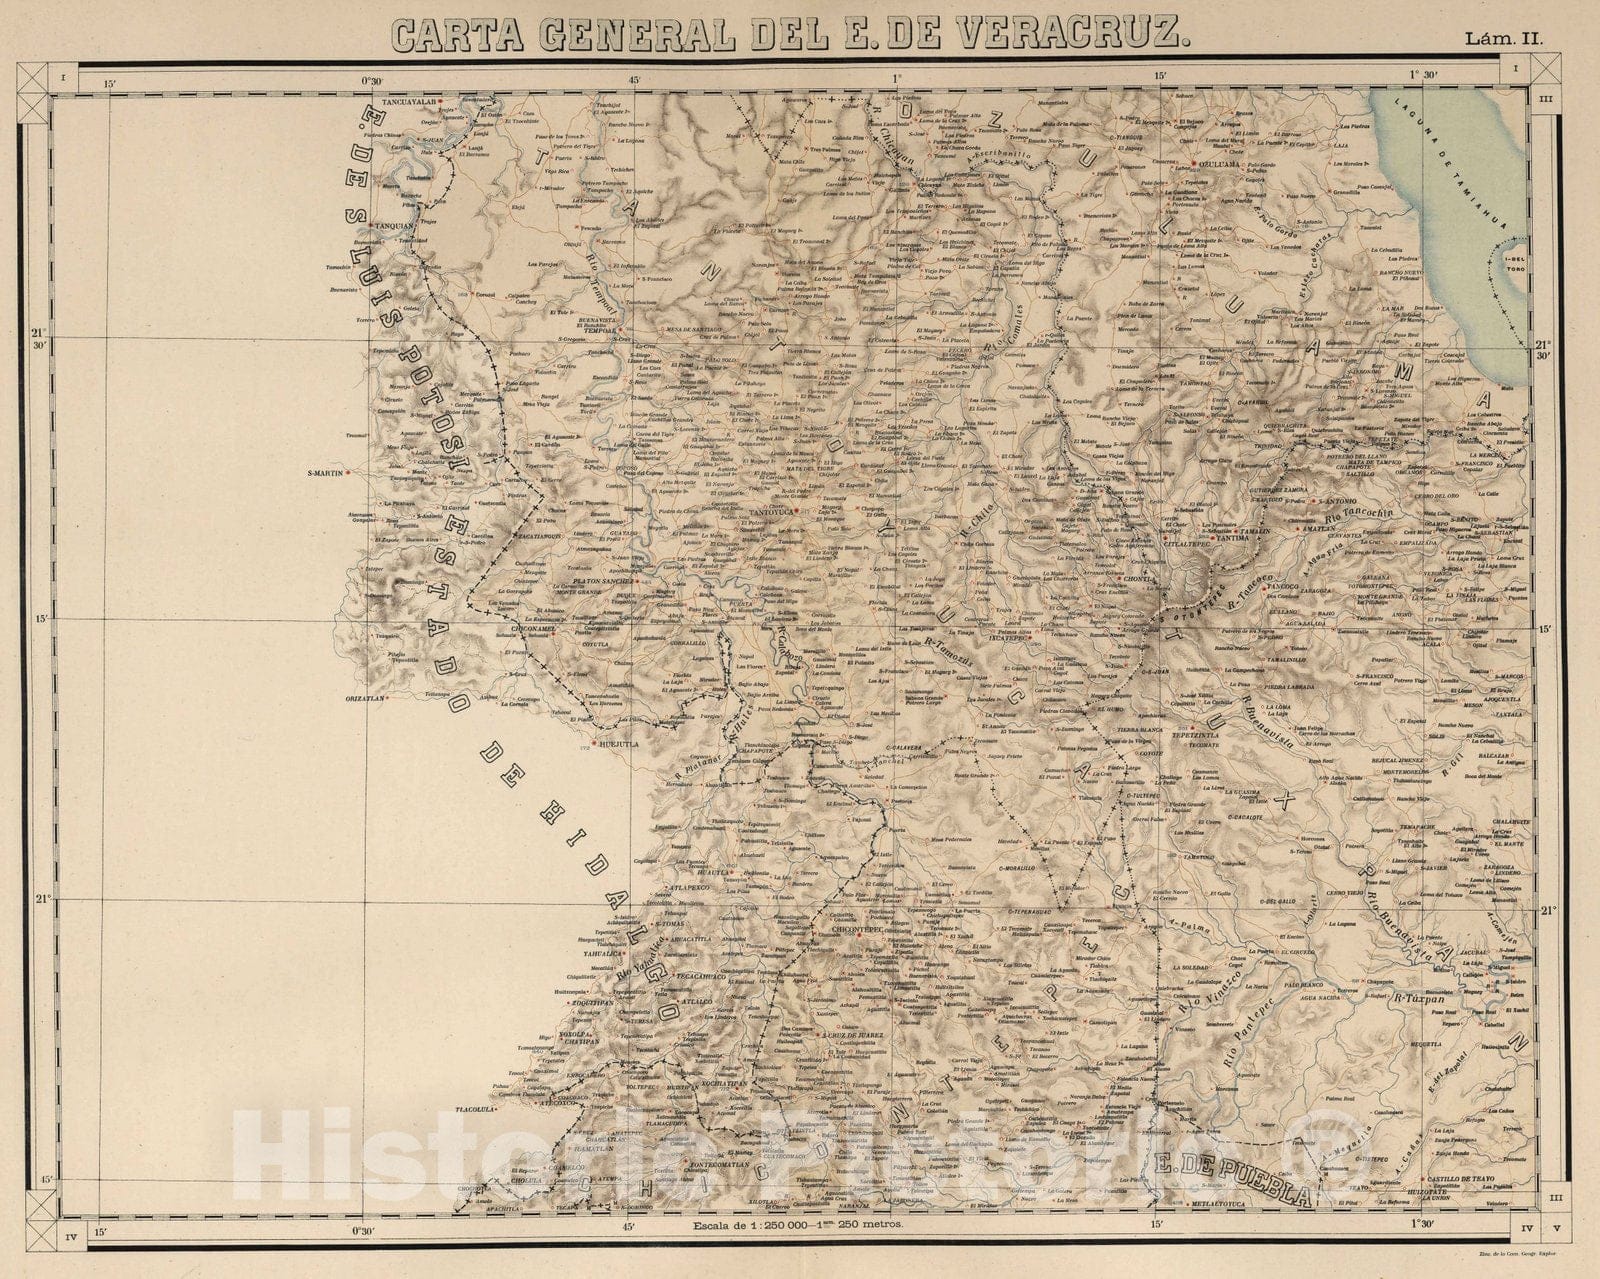 Historic Map : Veracruz (Mexico), 1905 Lam. II. Carte General de E. de Veracruz. , Vintage Wall Art